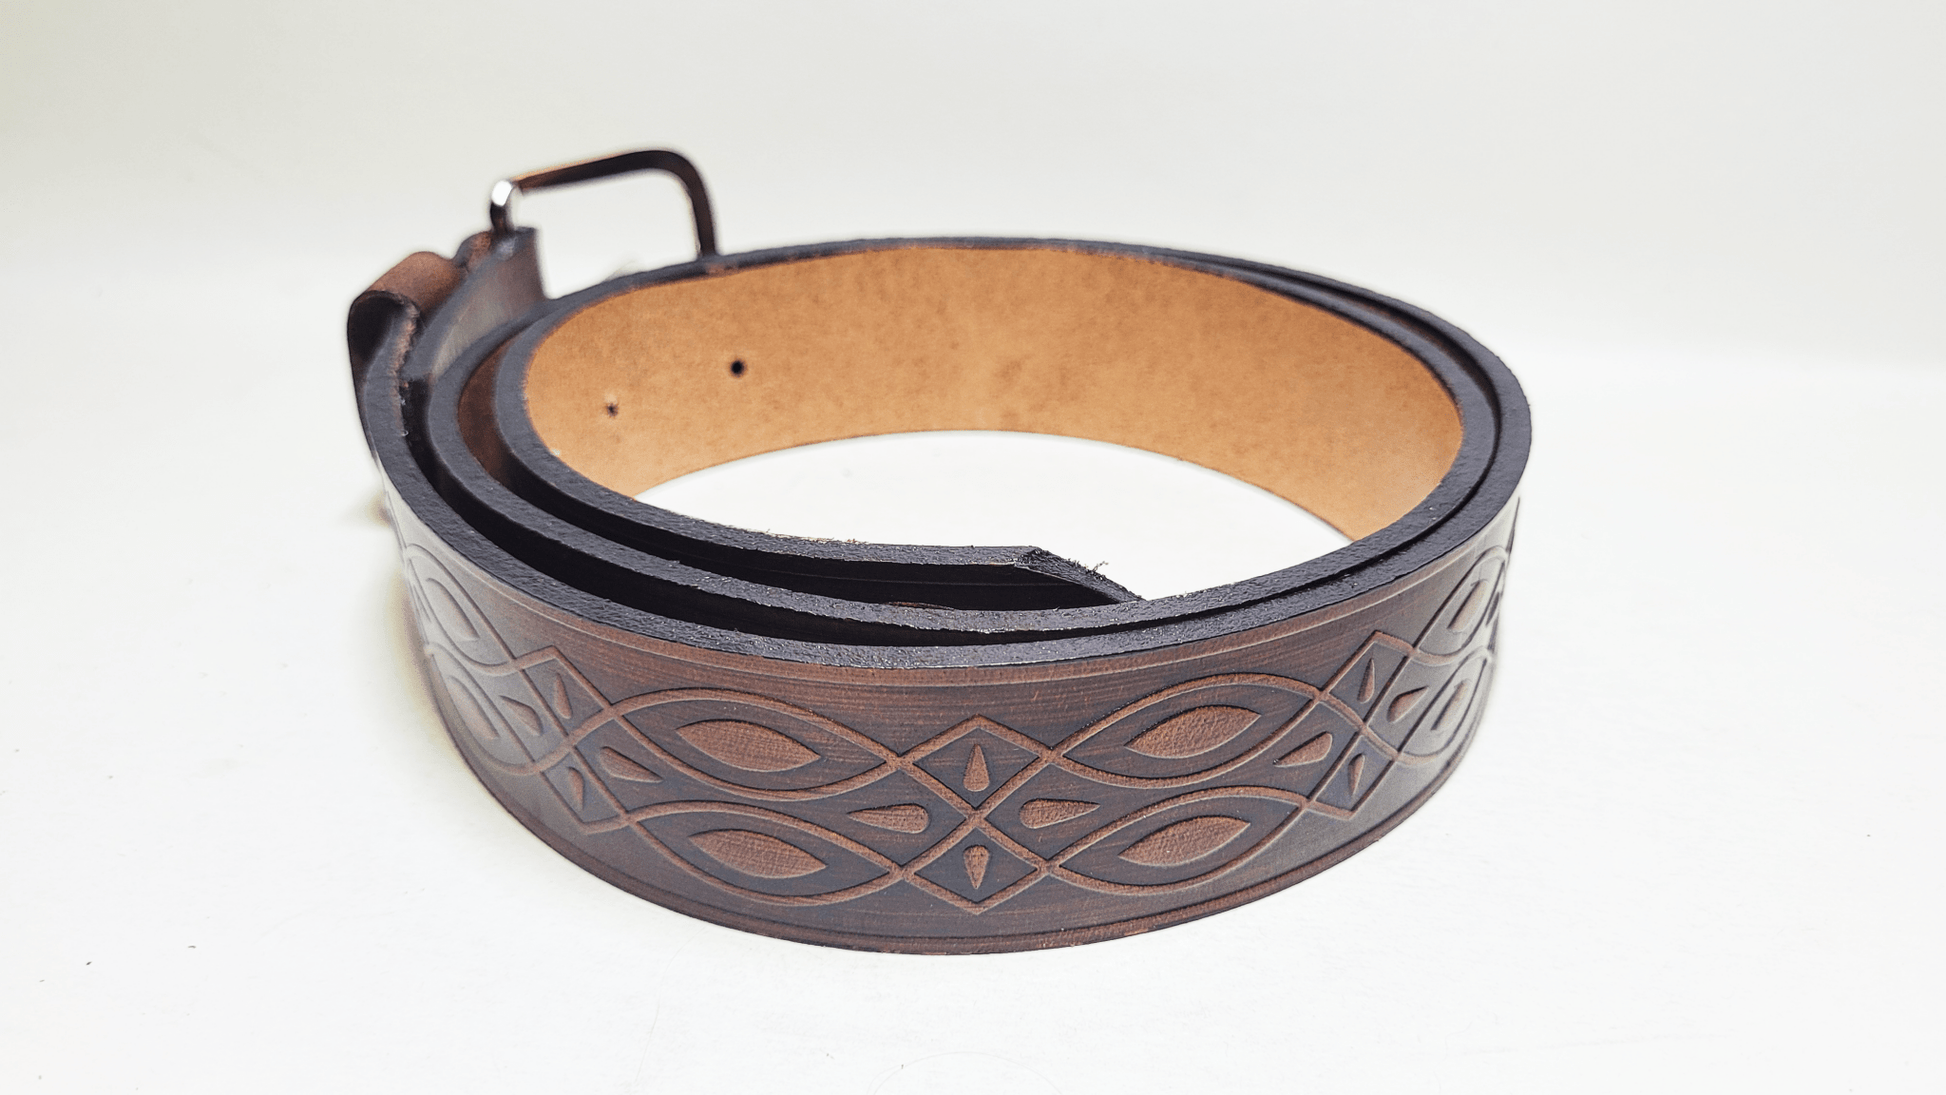 Handmade Embossed Buffalo Leather Belt - Buffalo Artisanal - C-264